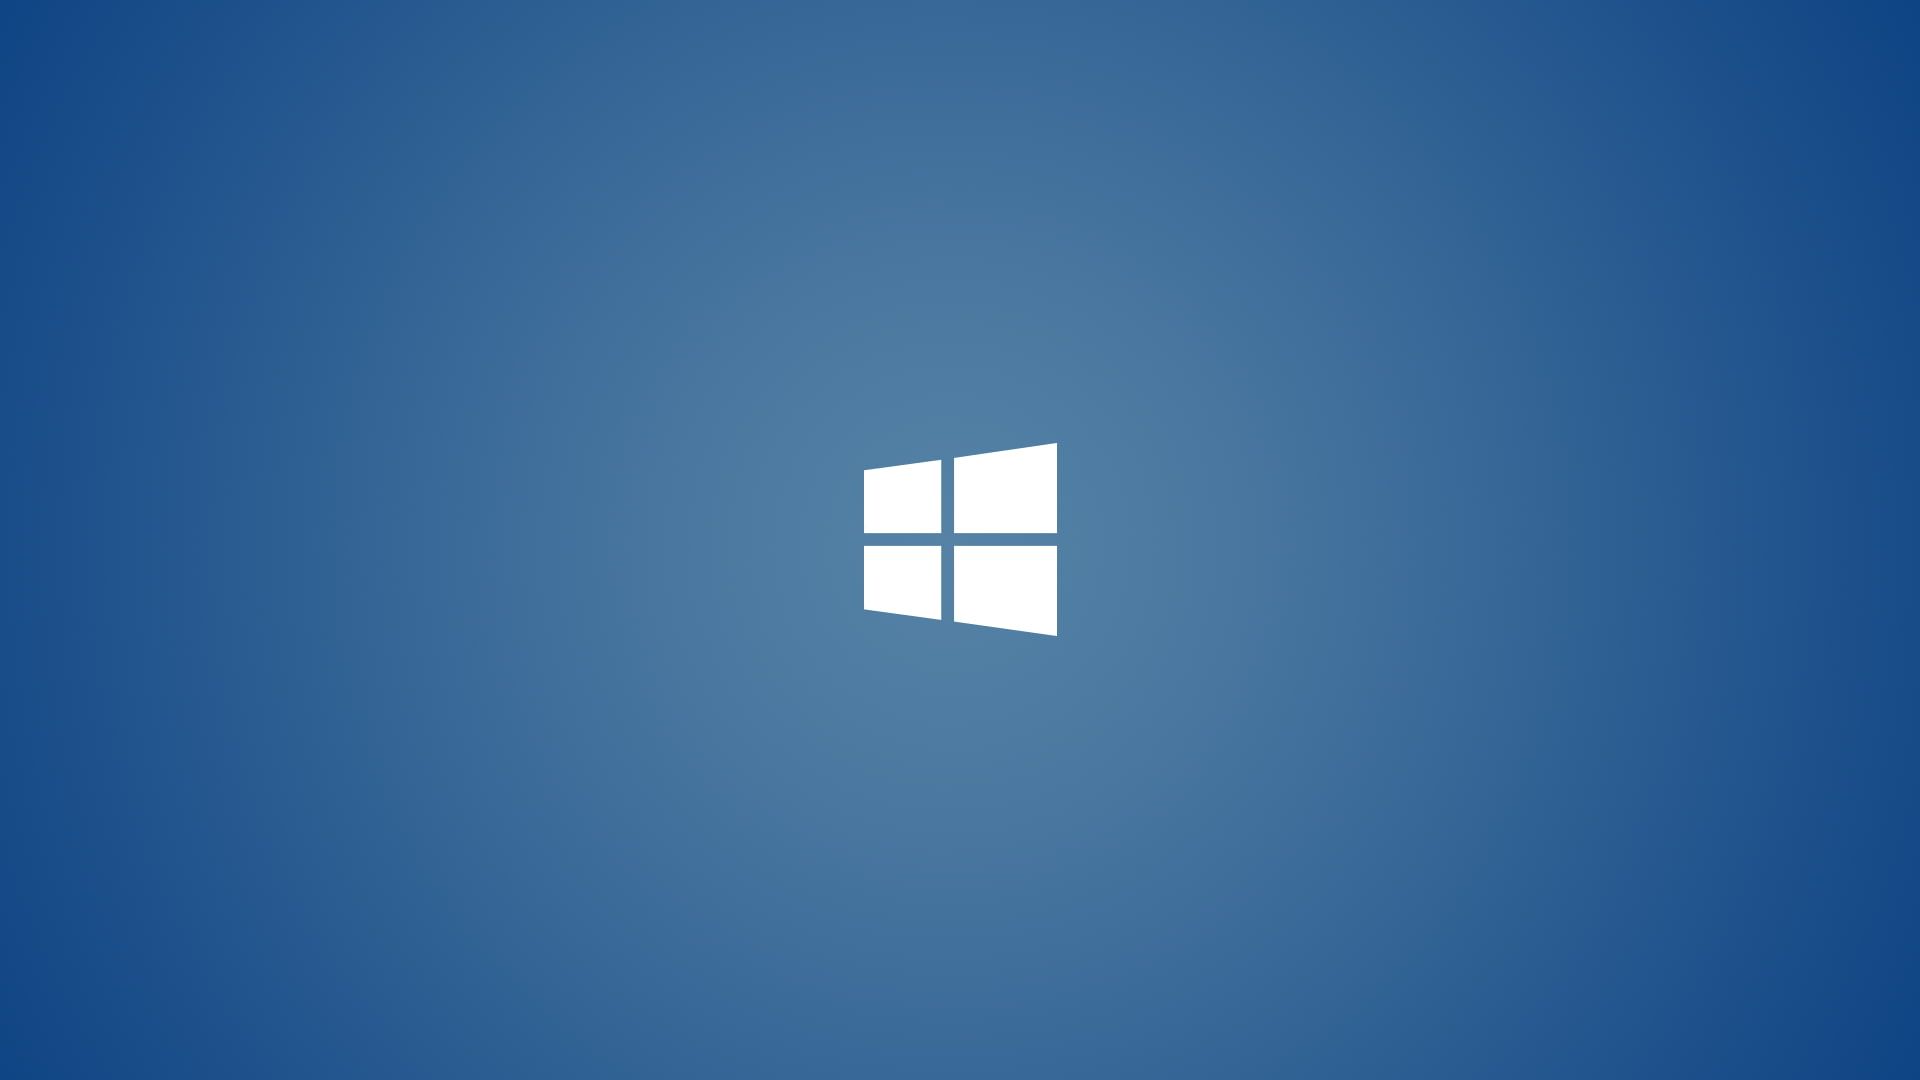 Windows 10 Minimalism Wallpapers - Wallpaper Cave